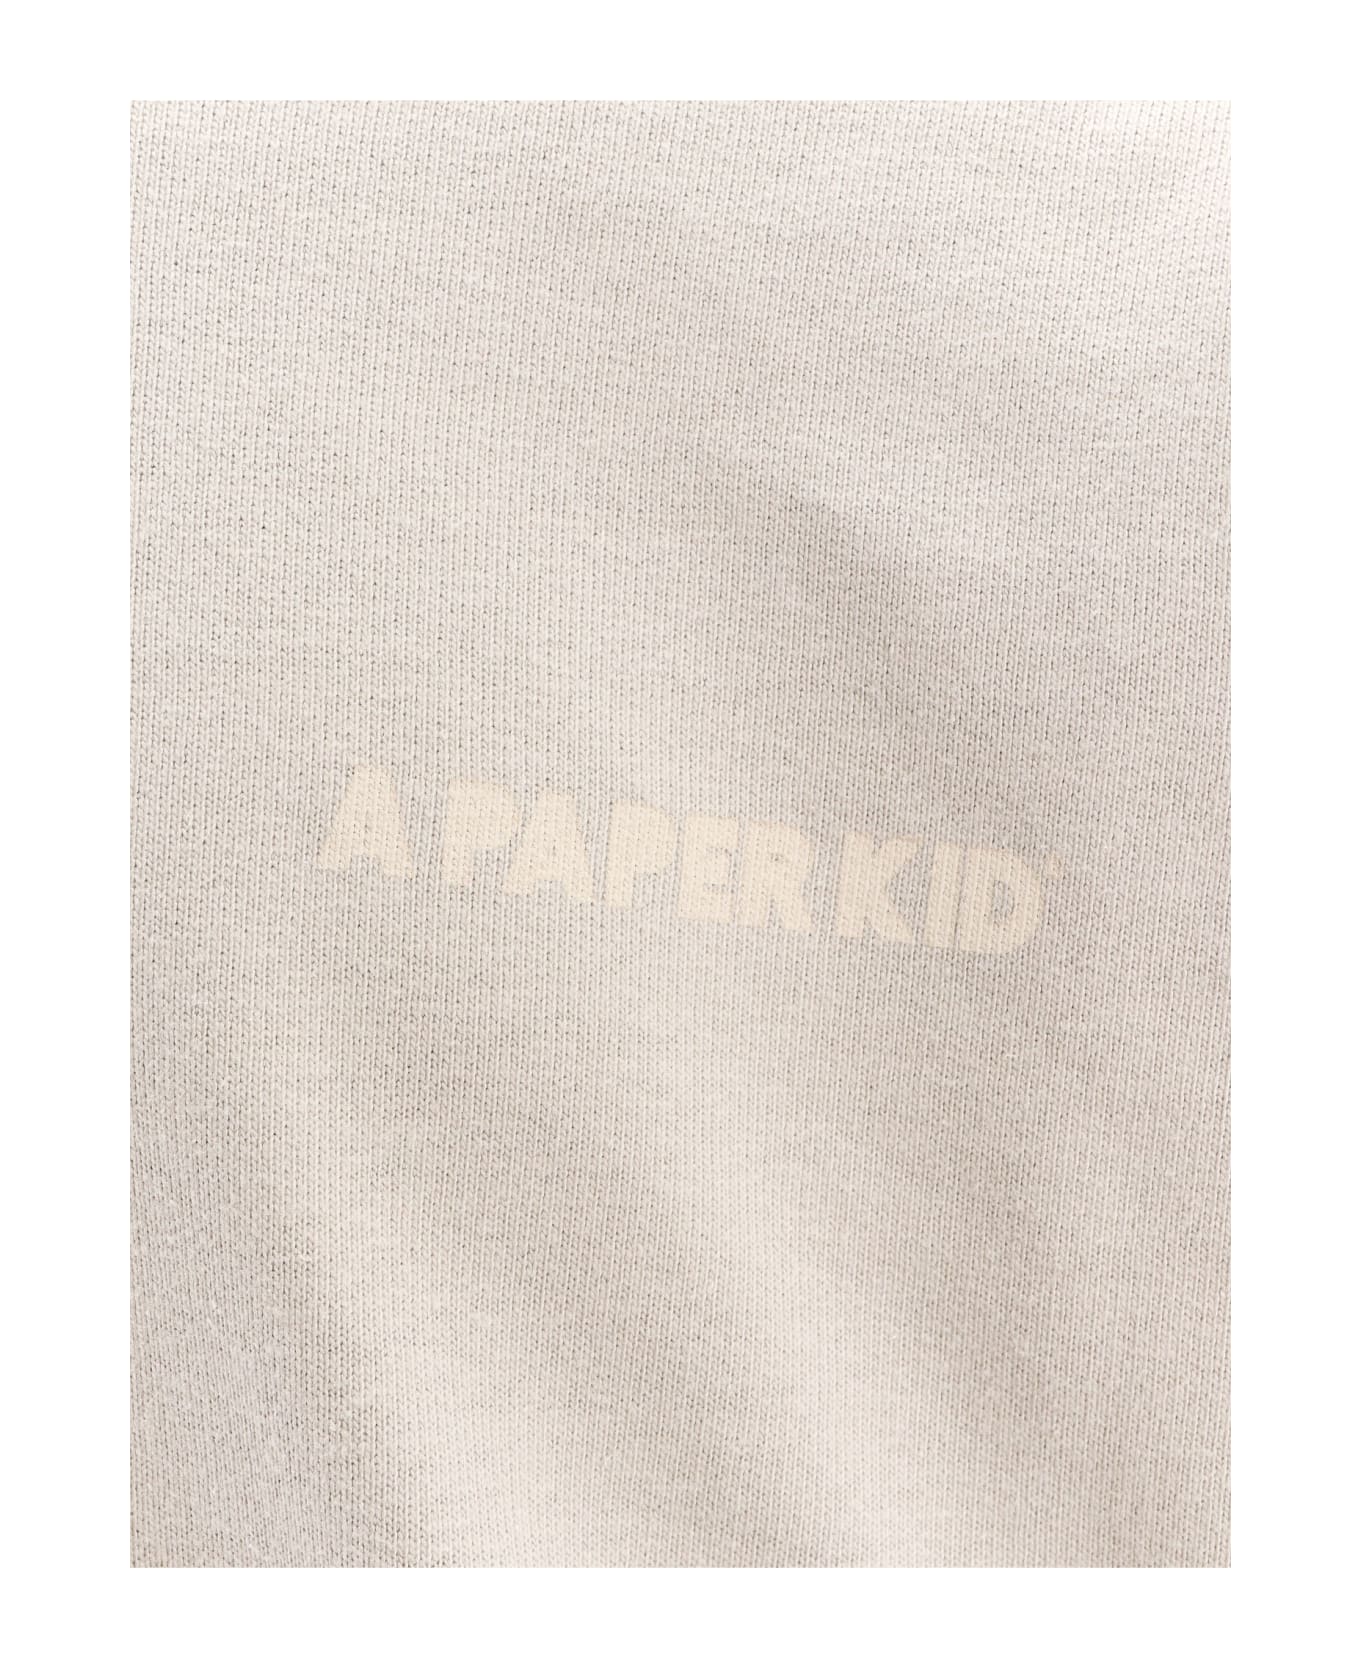 A Paper Kid Sweatshirt - Beige